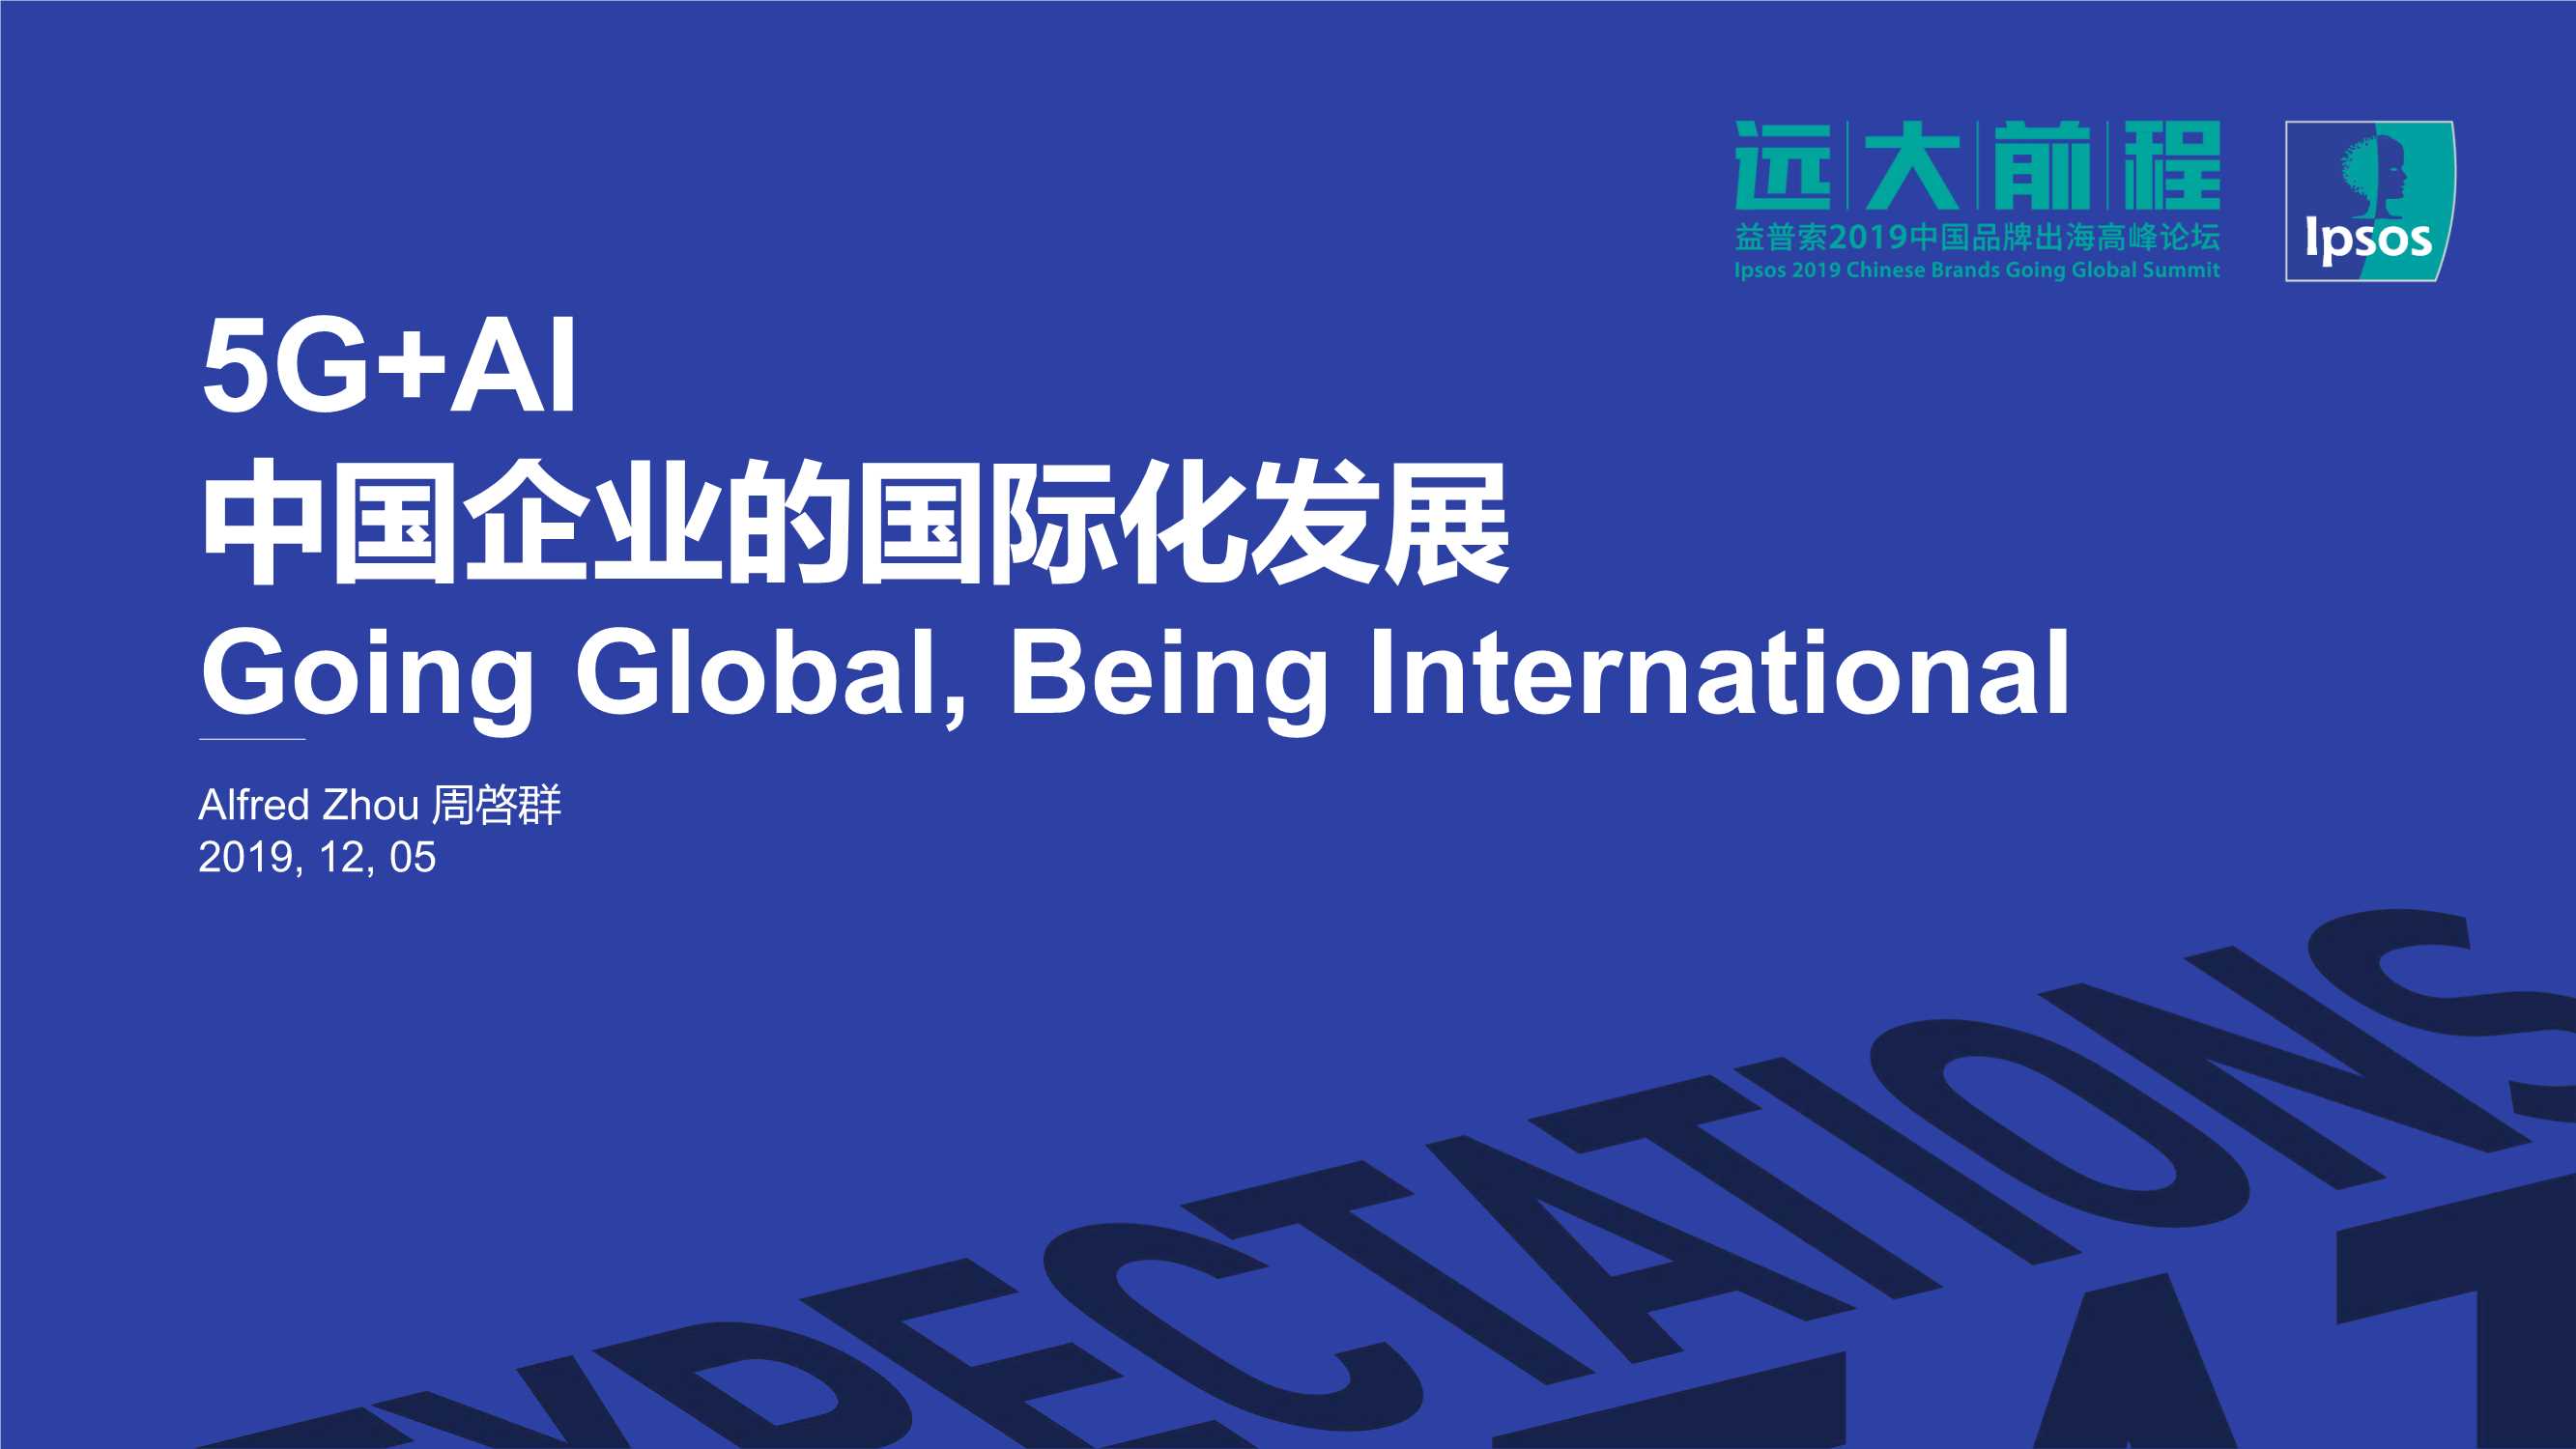 5G AI：中国企业的国际化发展-远大前程-2019.12-16页